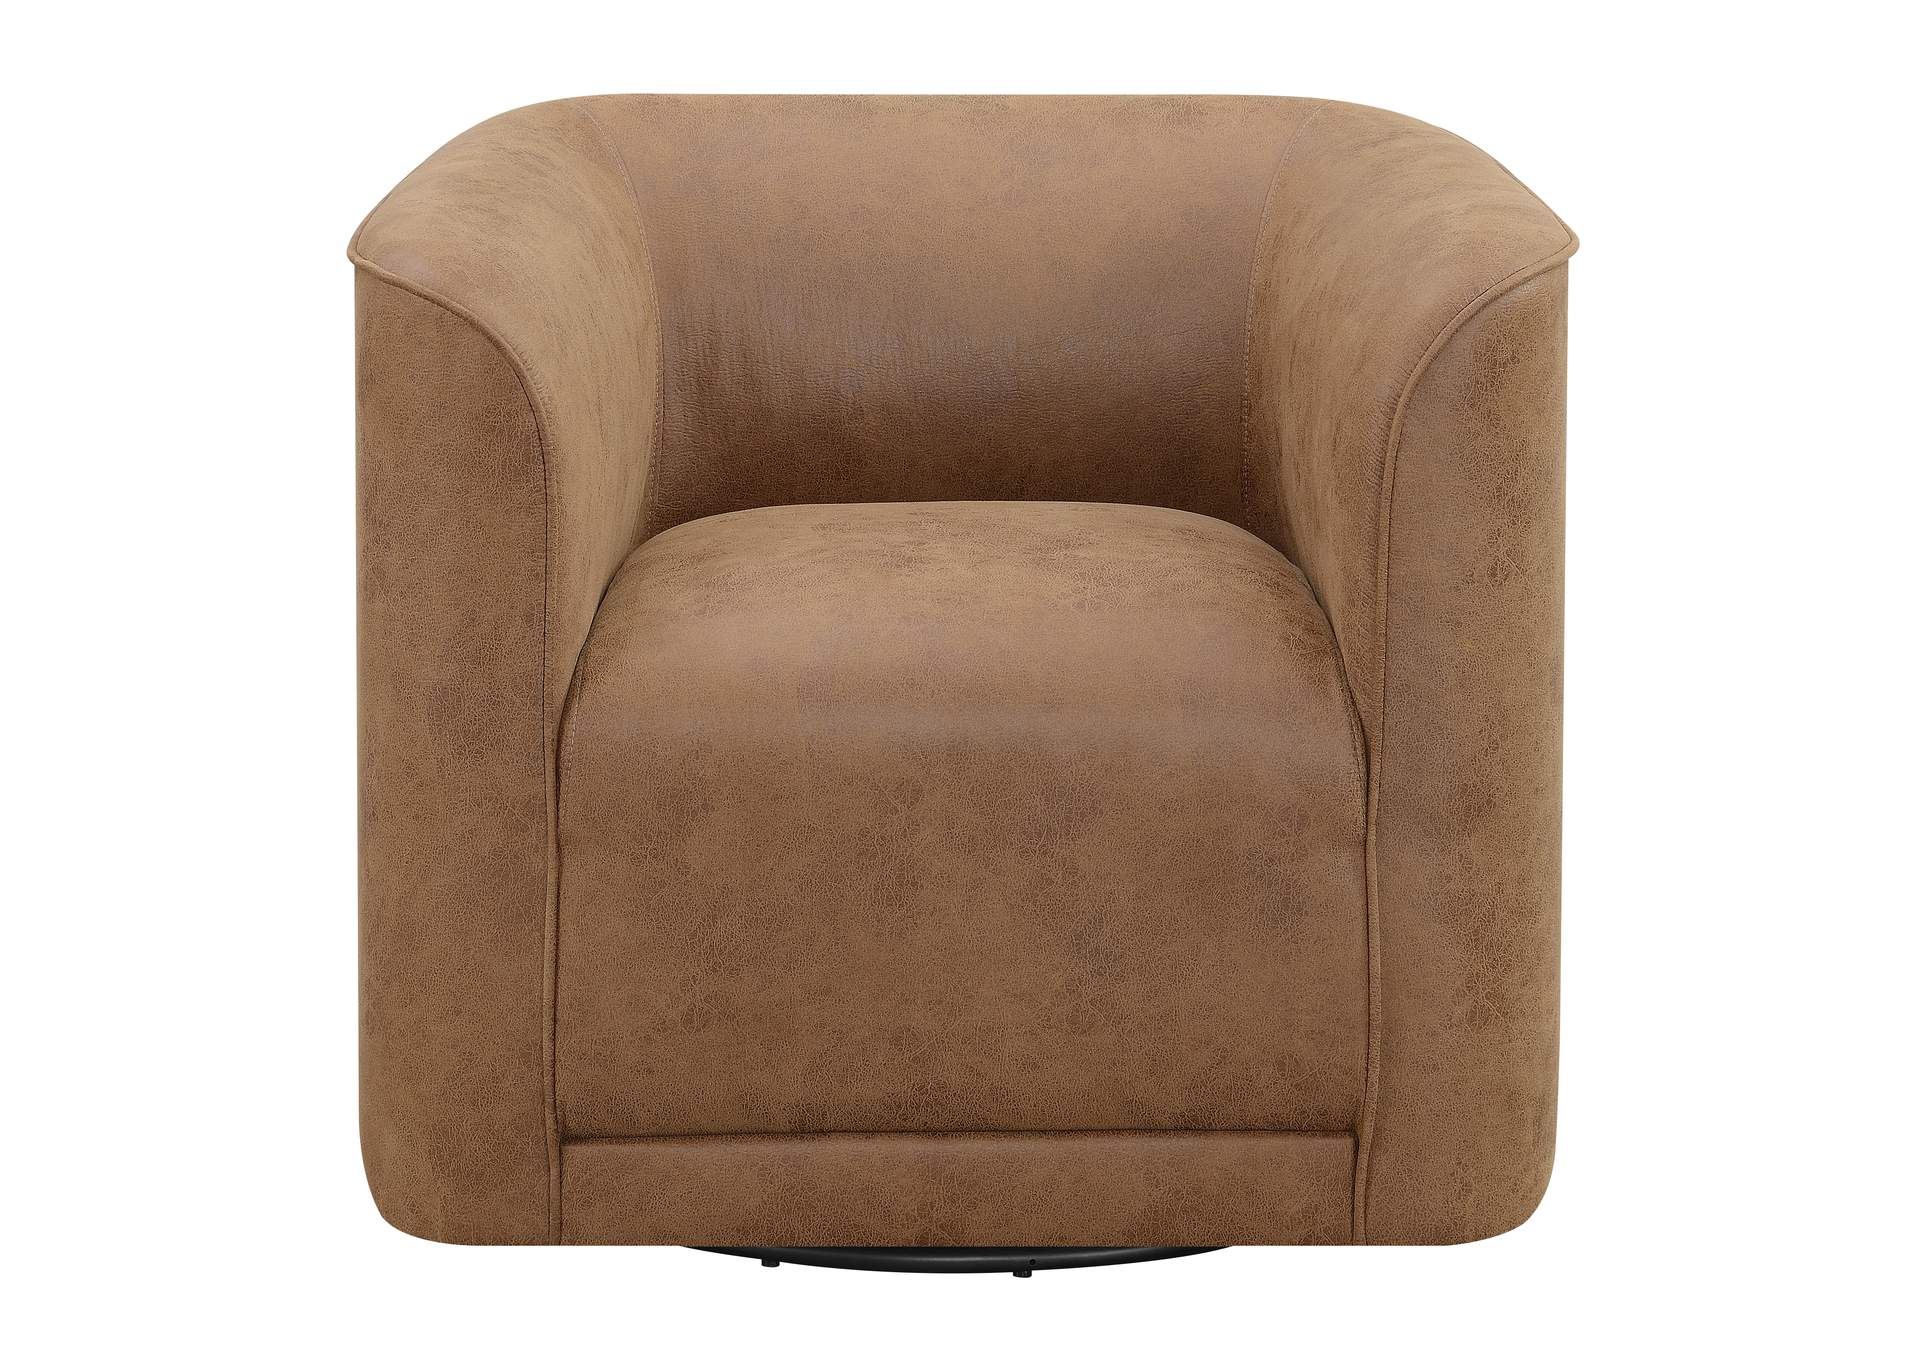 Whirlaway Swivel Accent Chair,Emerald Home Furnishings